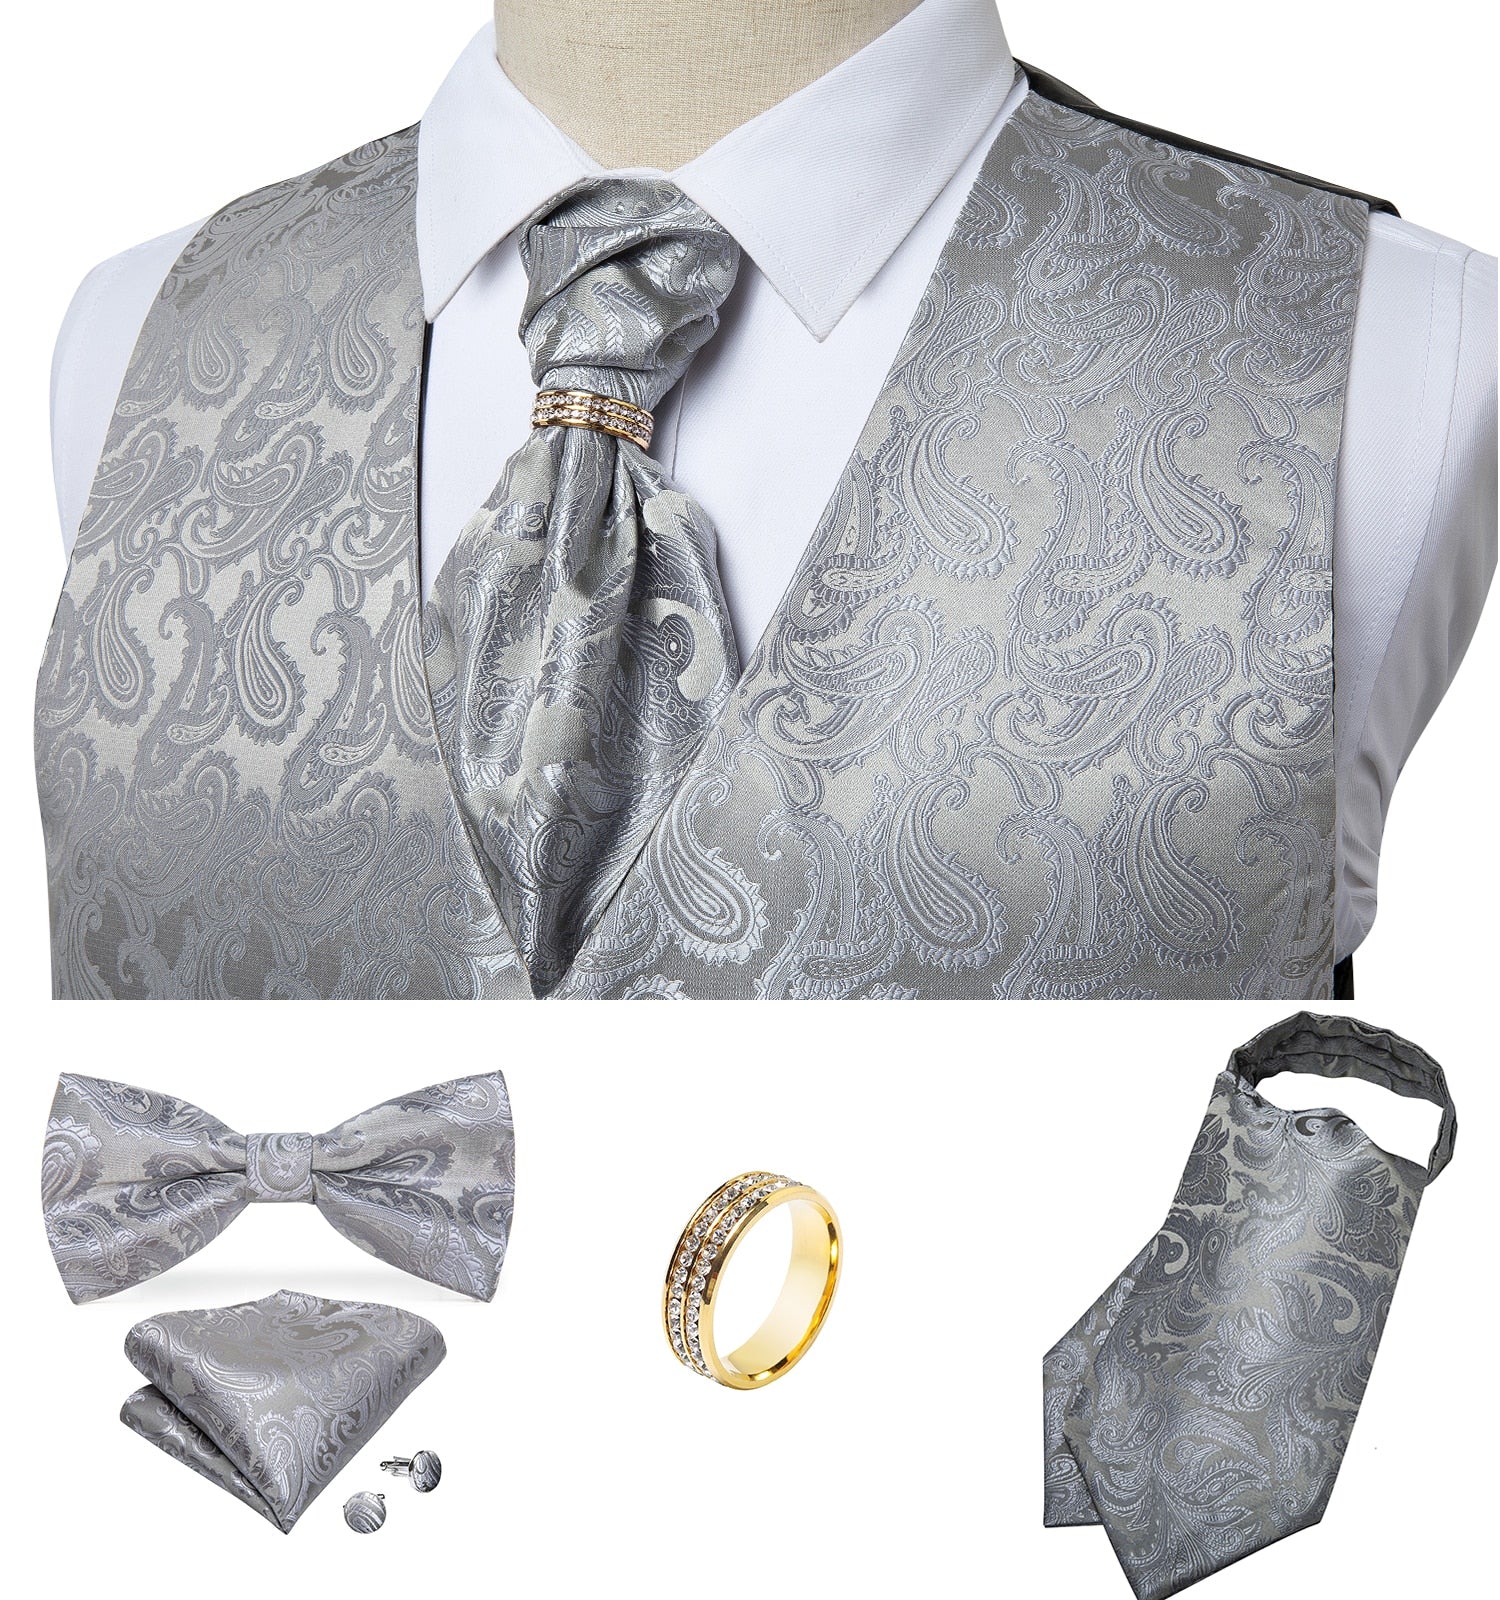 Voguable Men Suit Vest silver Paisley Floral Silk Wedding Waistcoat Men Ascot Tie Pocket Square Necktie Ring Sleeveless Jacket DiBanGu voguable